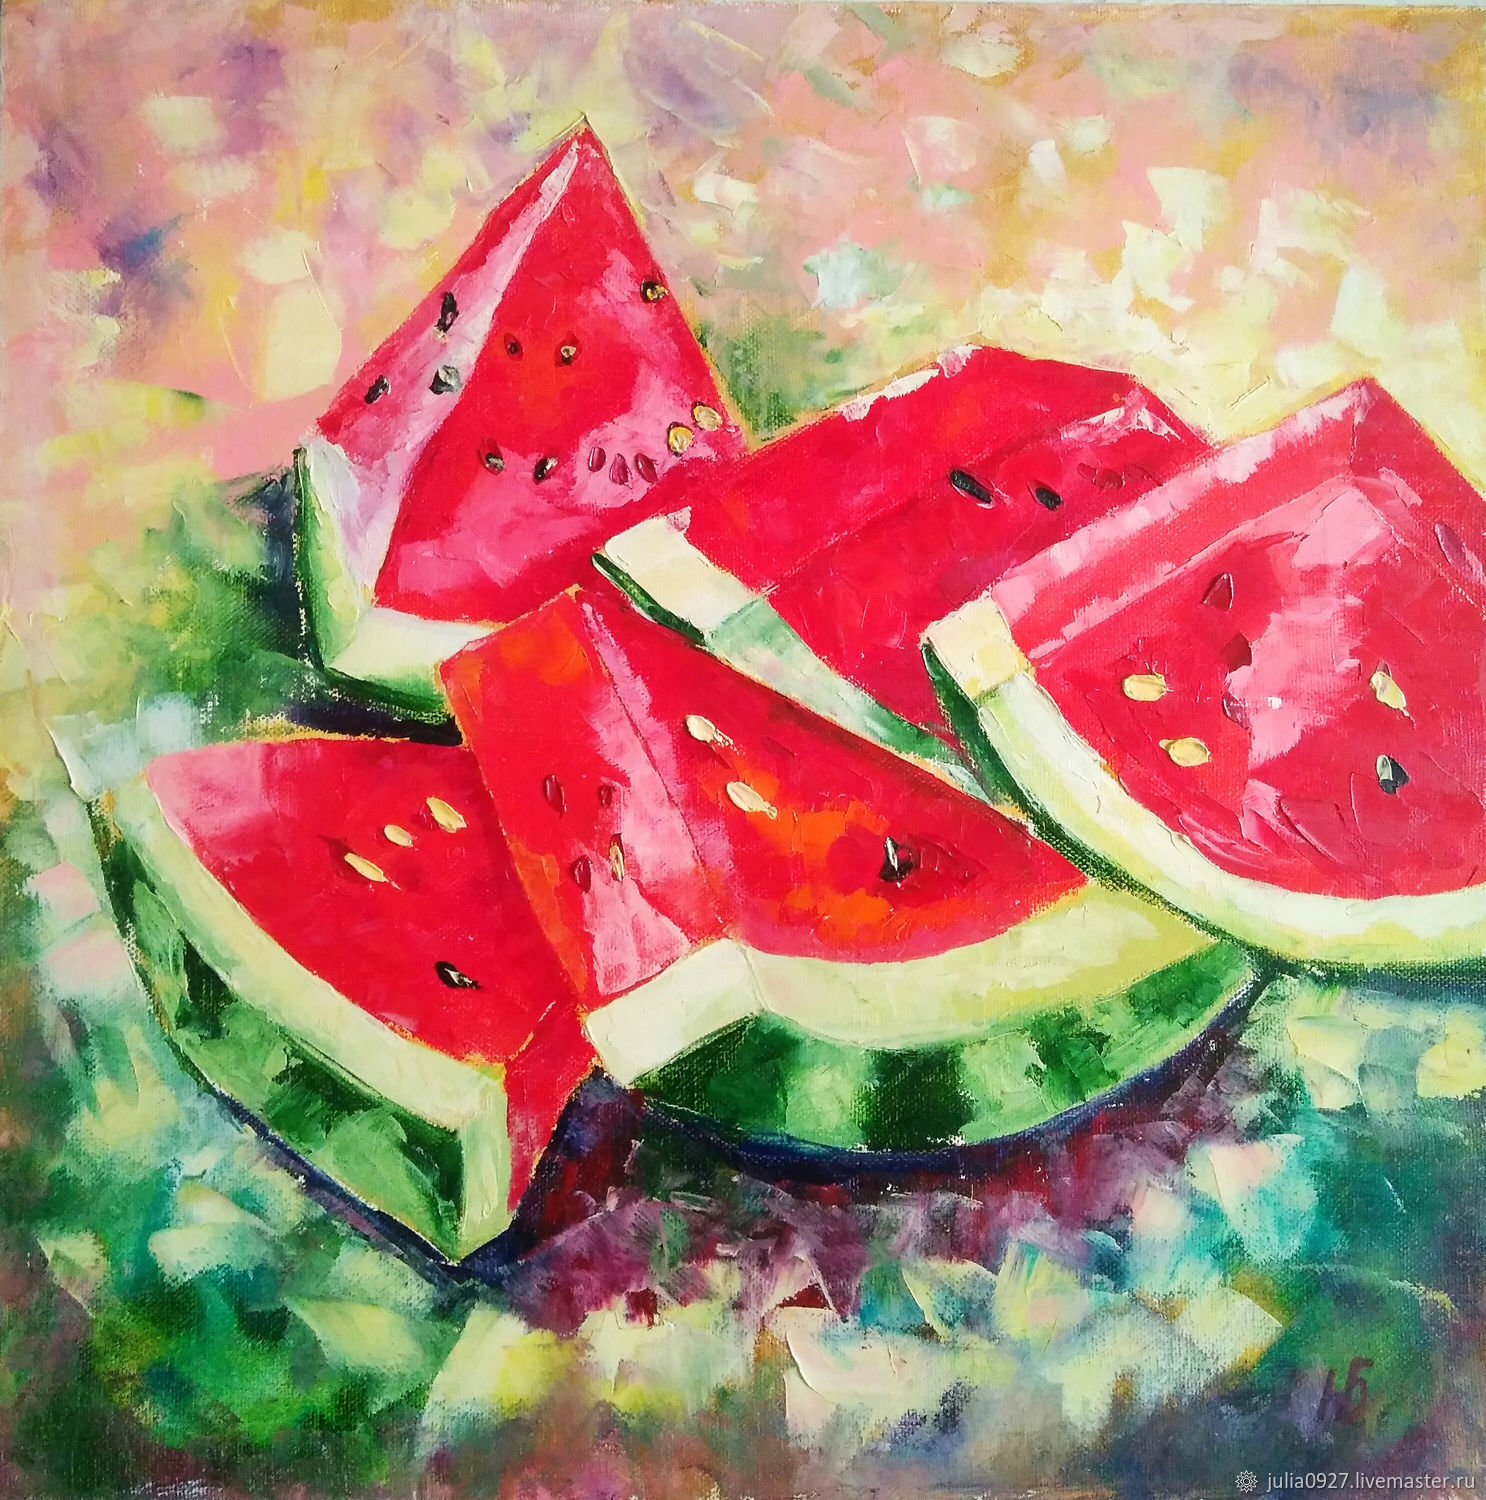 Painting Watermelon still life oil palette knife, Pictures, Ekaterinburg,  Фото №1